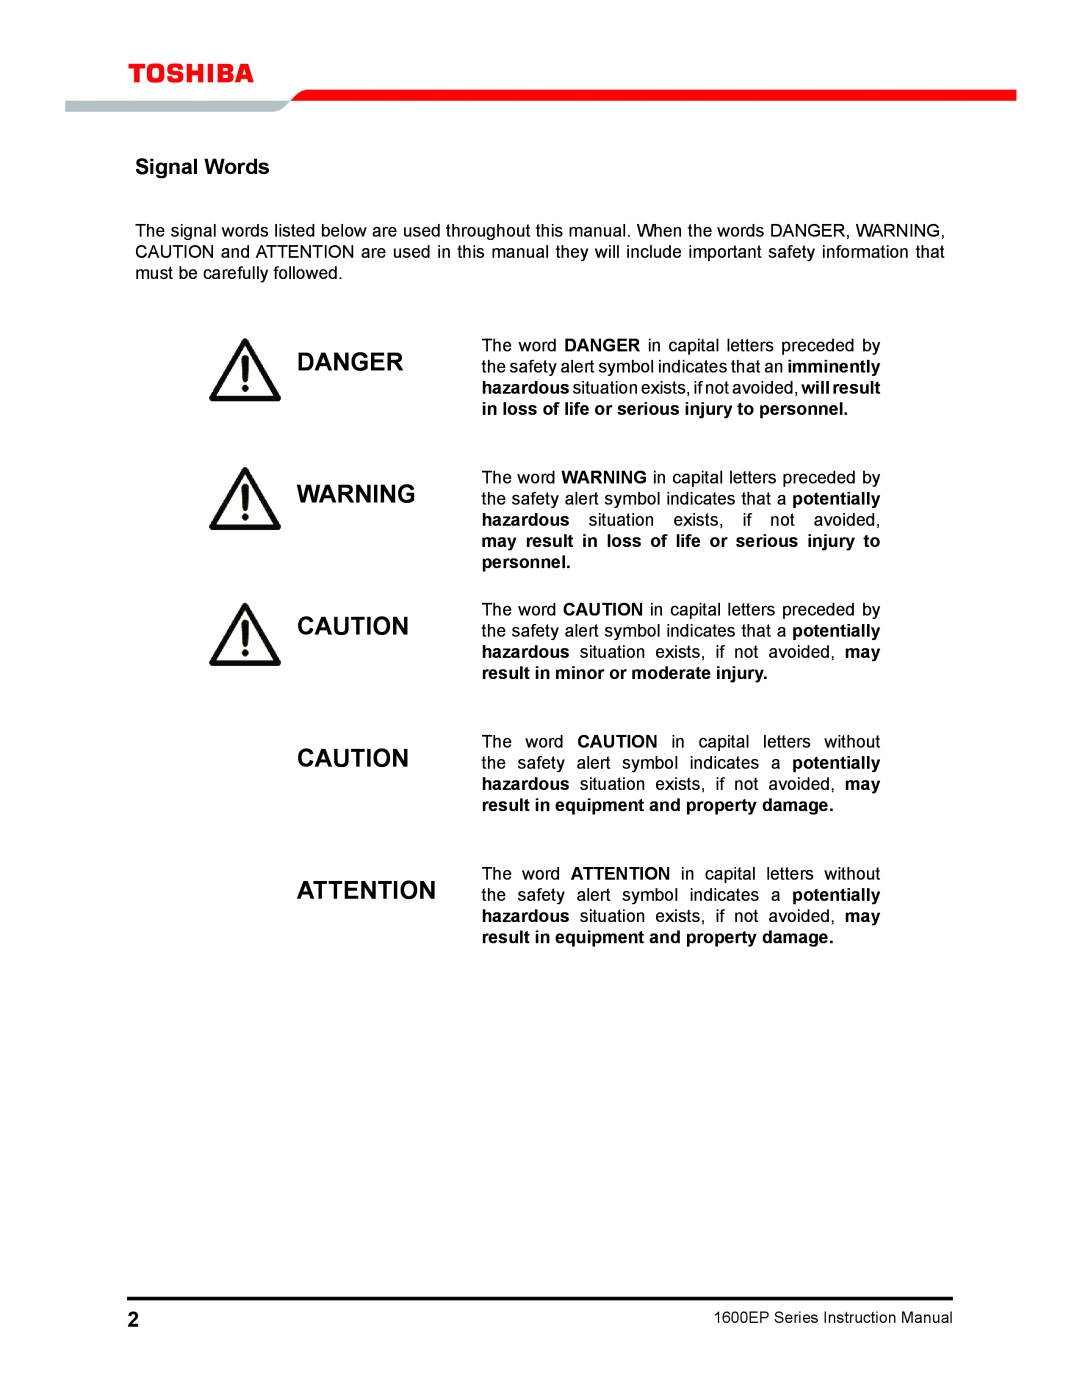 Toshiba 1600EP Series manual Danger, Signal Words 